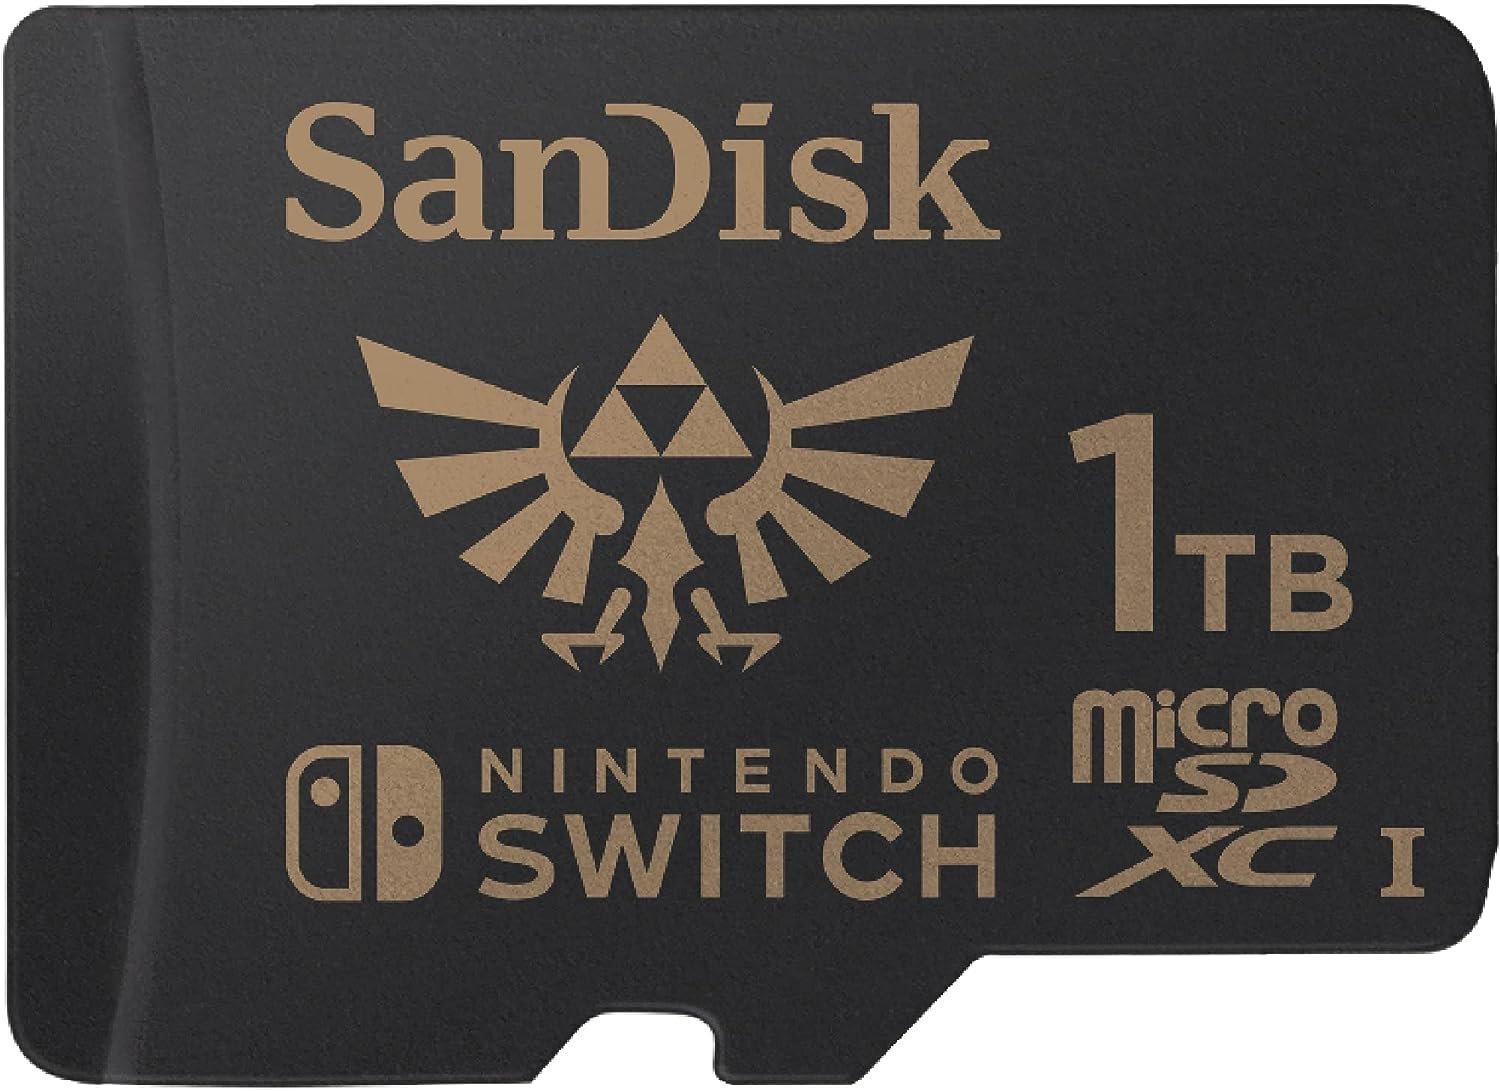 SanDisk carte Micro SD 1 Go